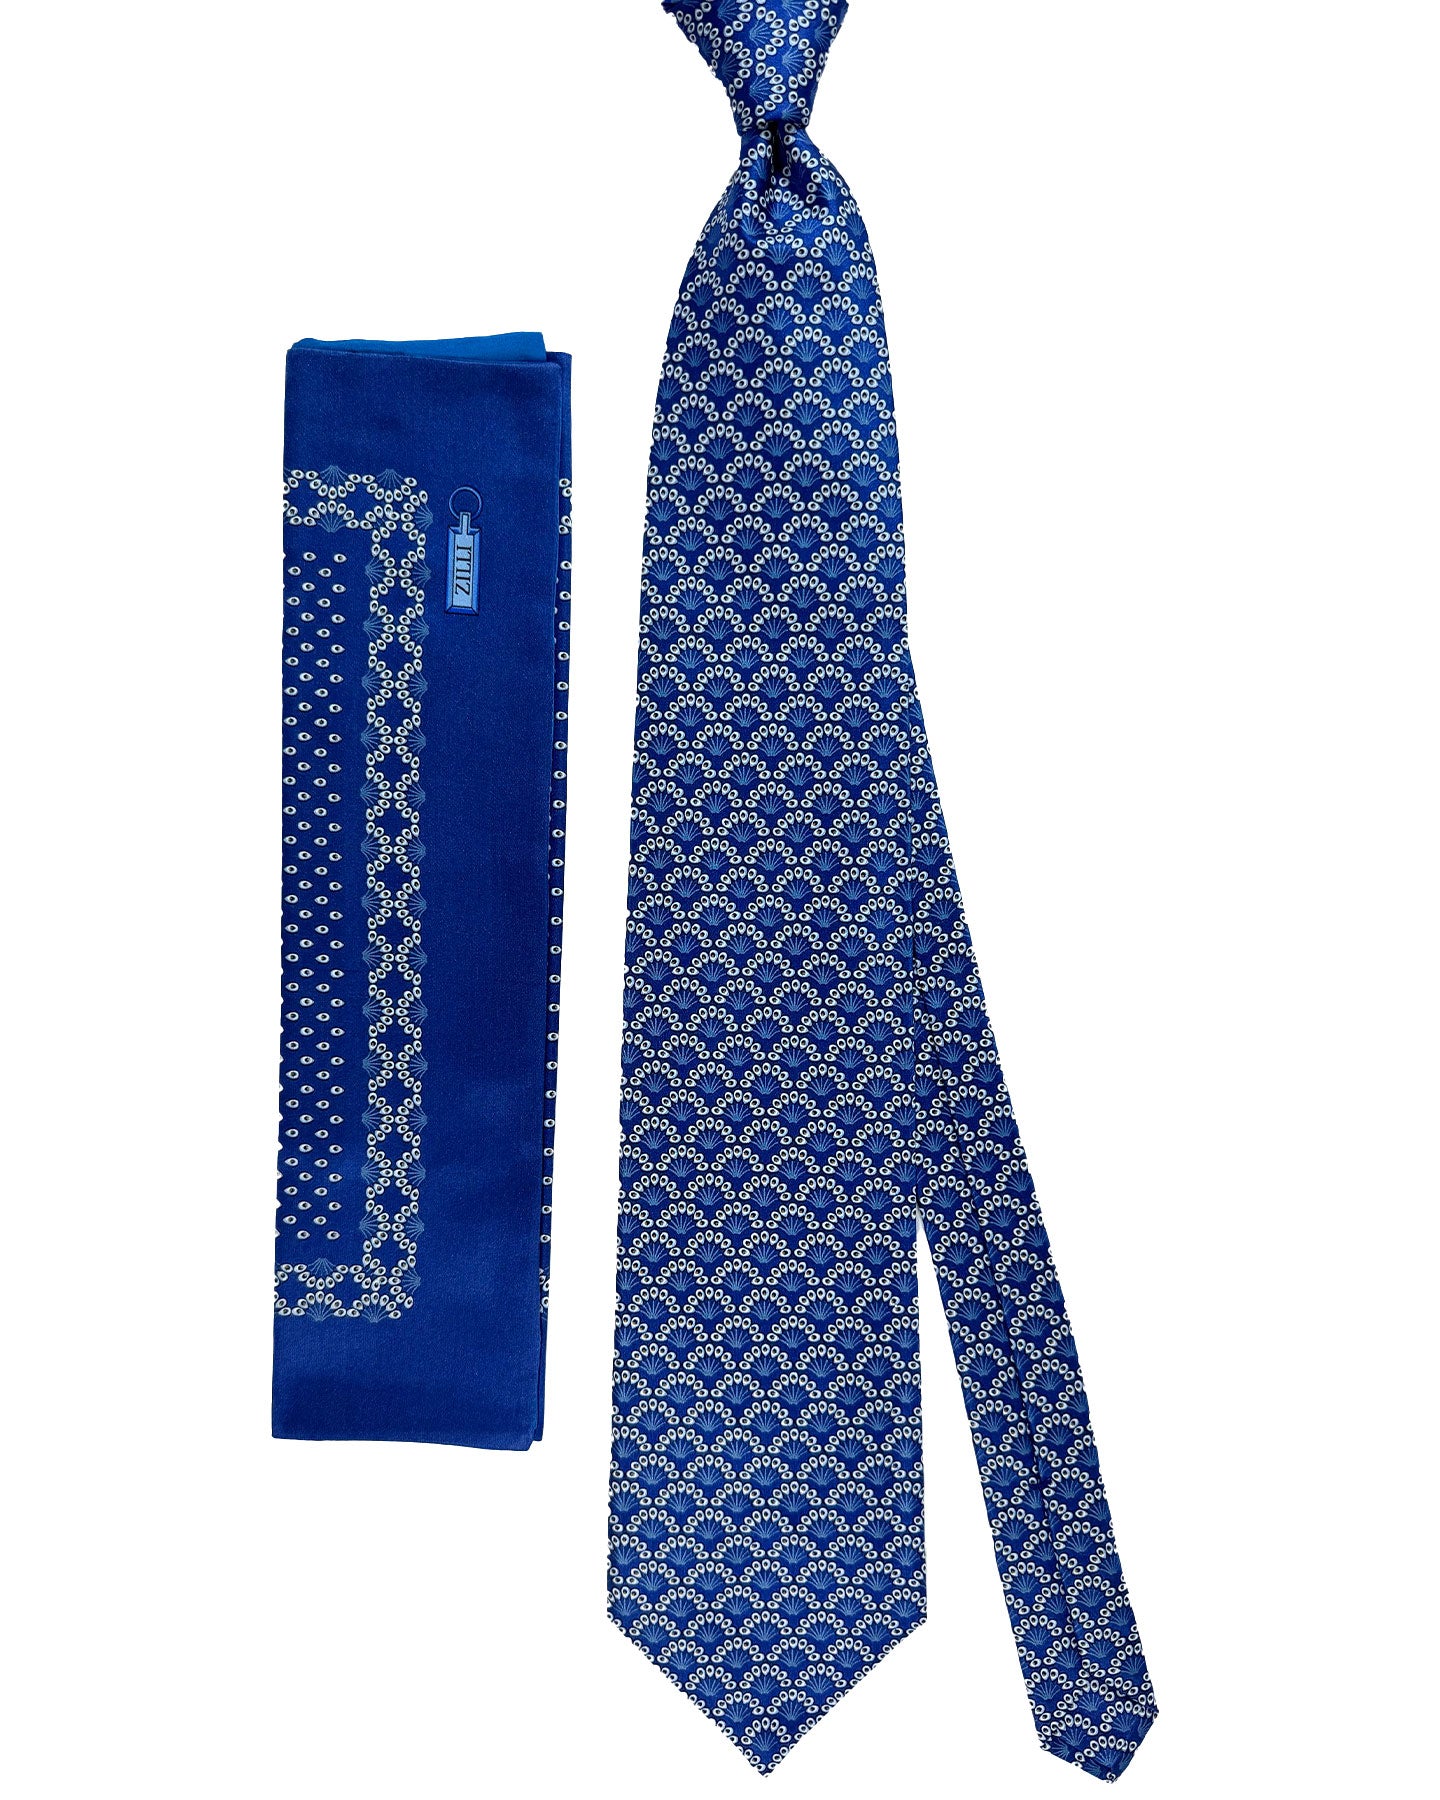 Zilli Tie & Matching Pocket Square Set Royal Blue Design